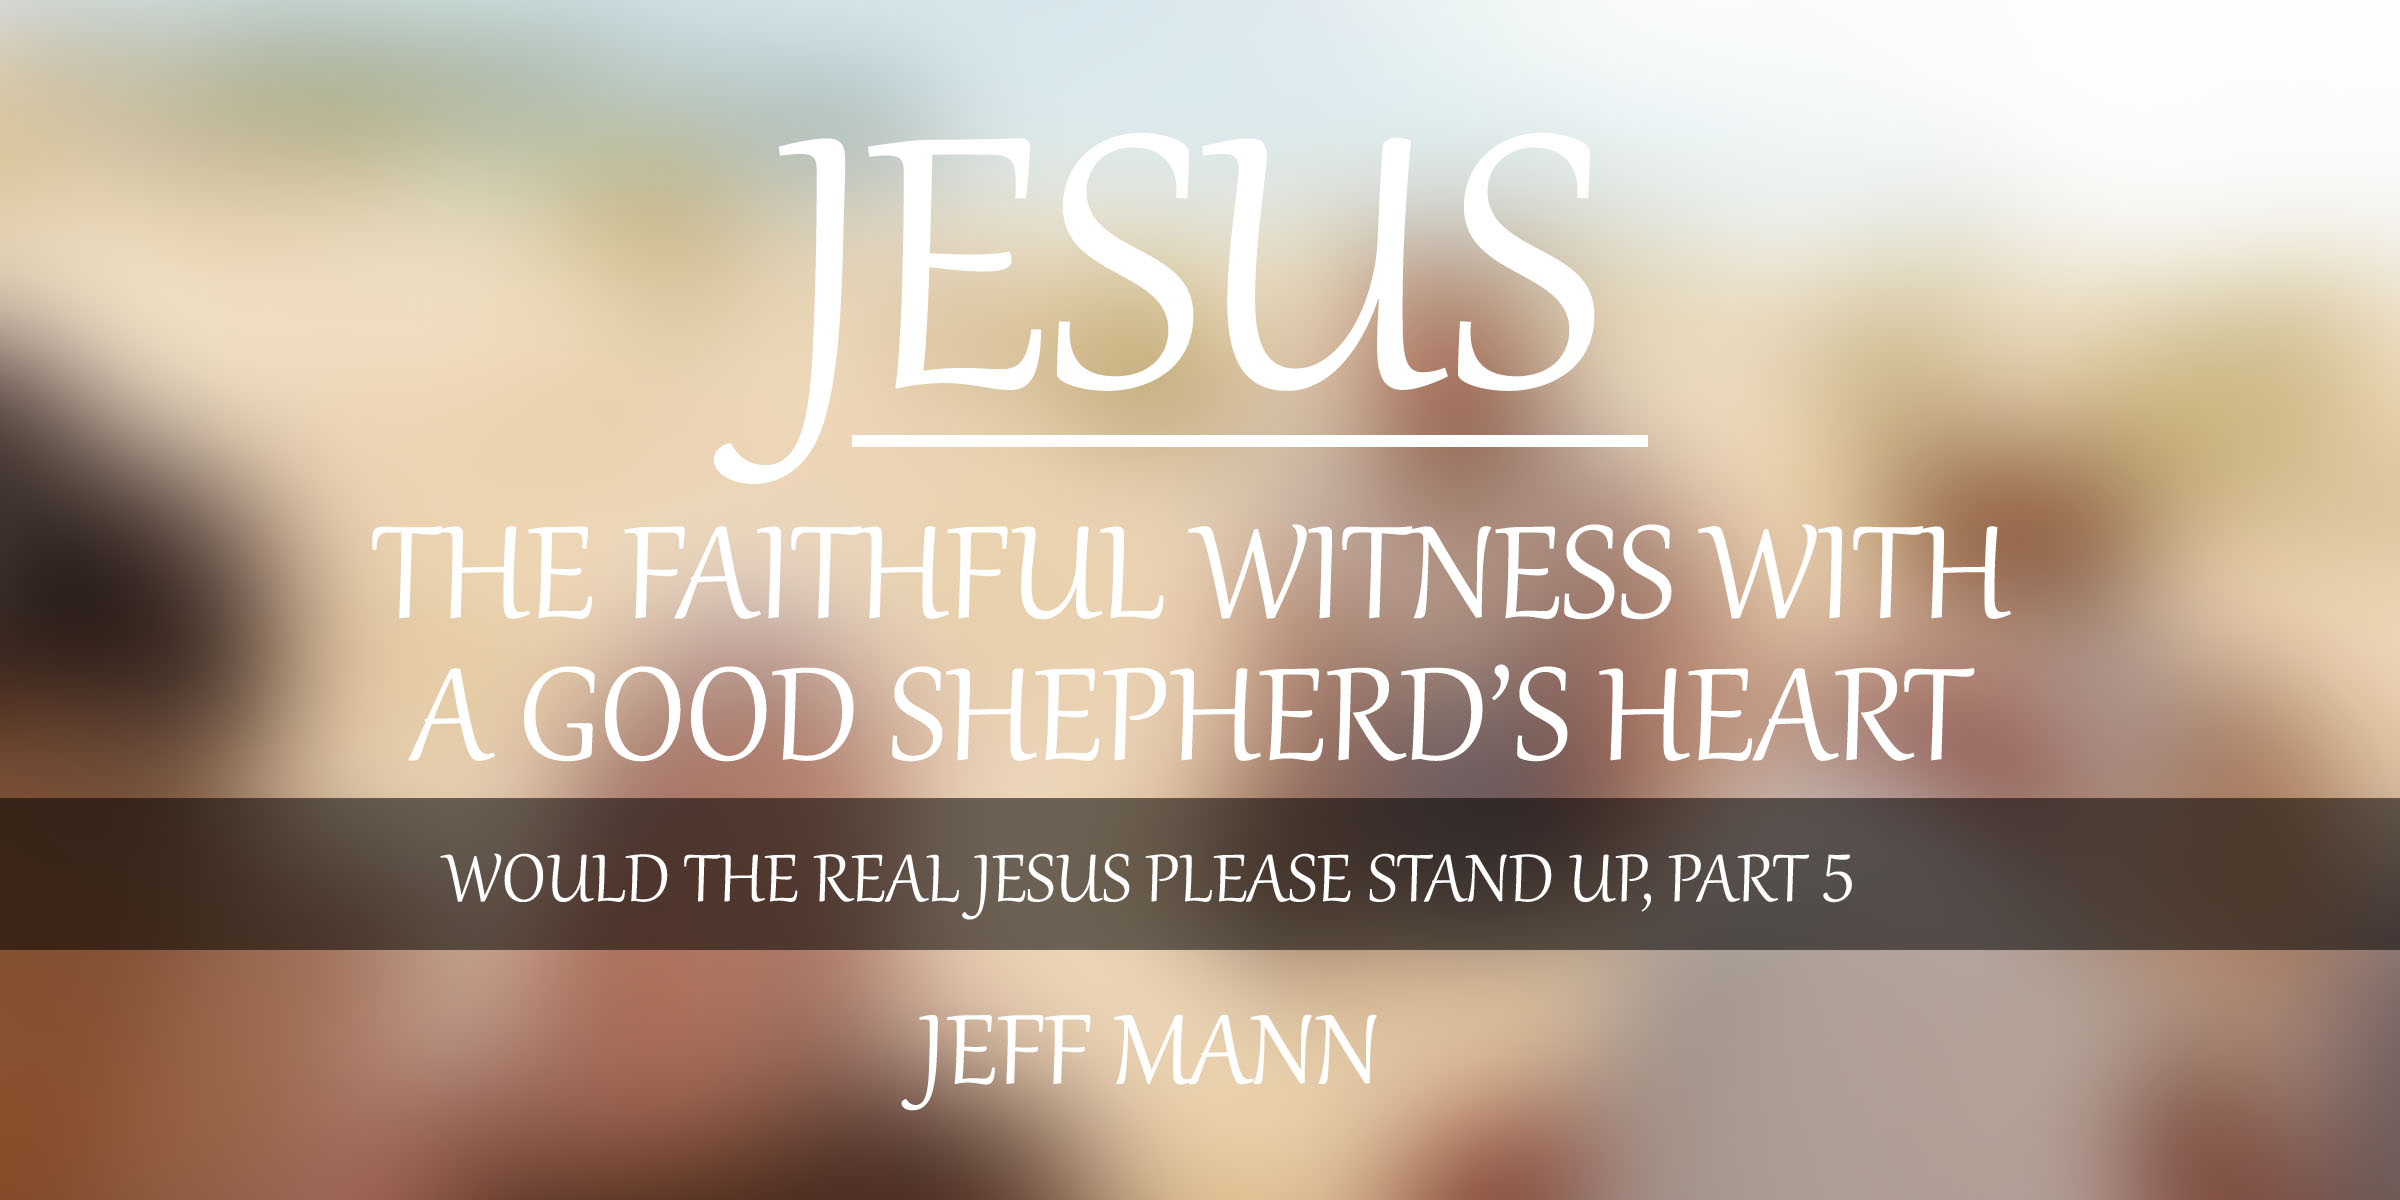 Jesus, the Faithful Witness with a Good Shepherd’s Heart